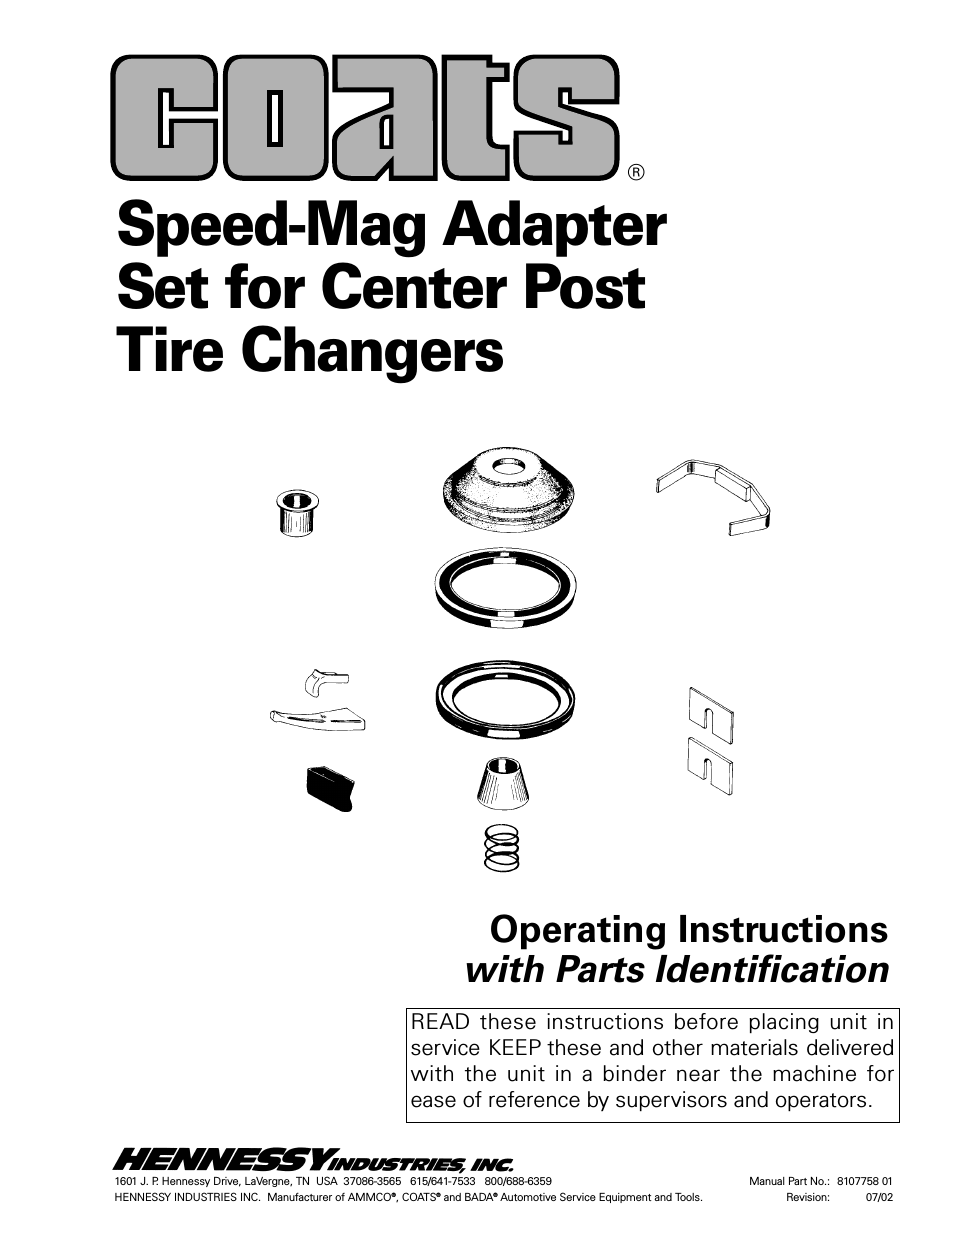 Speed-Mag Adapter Set